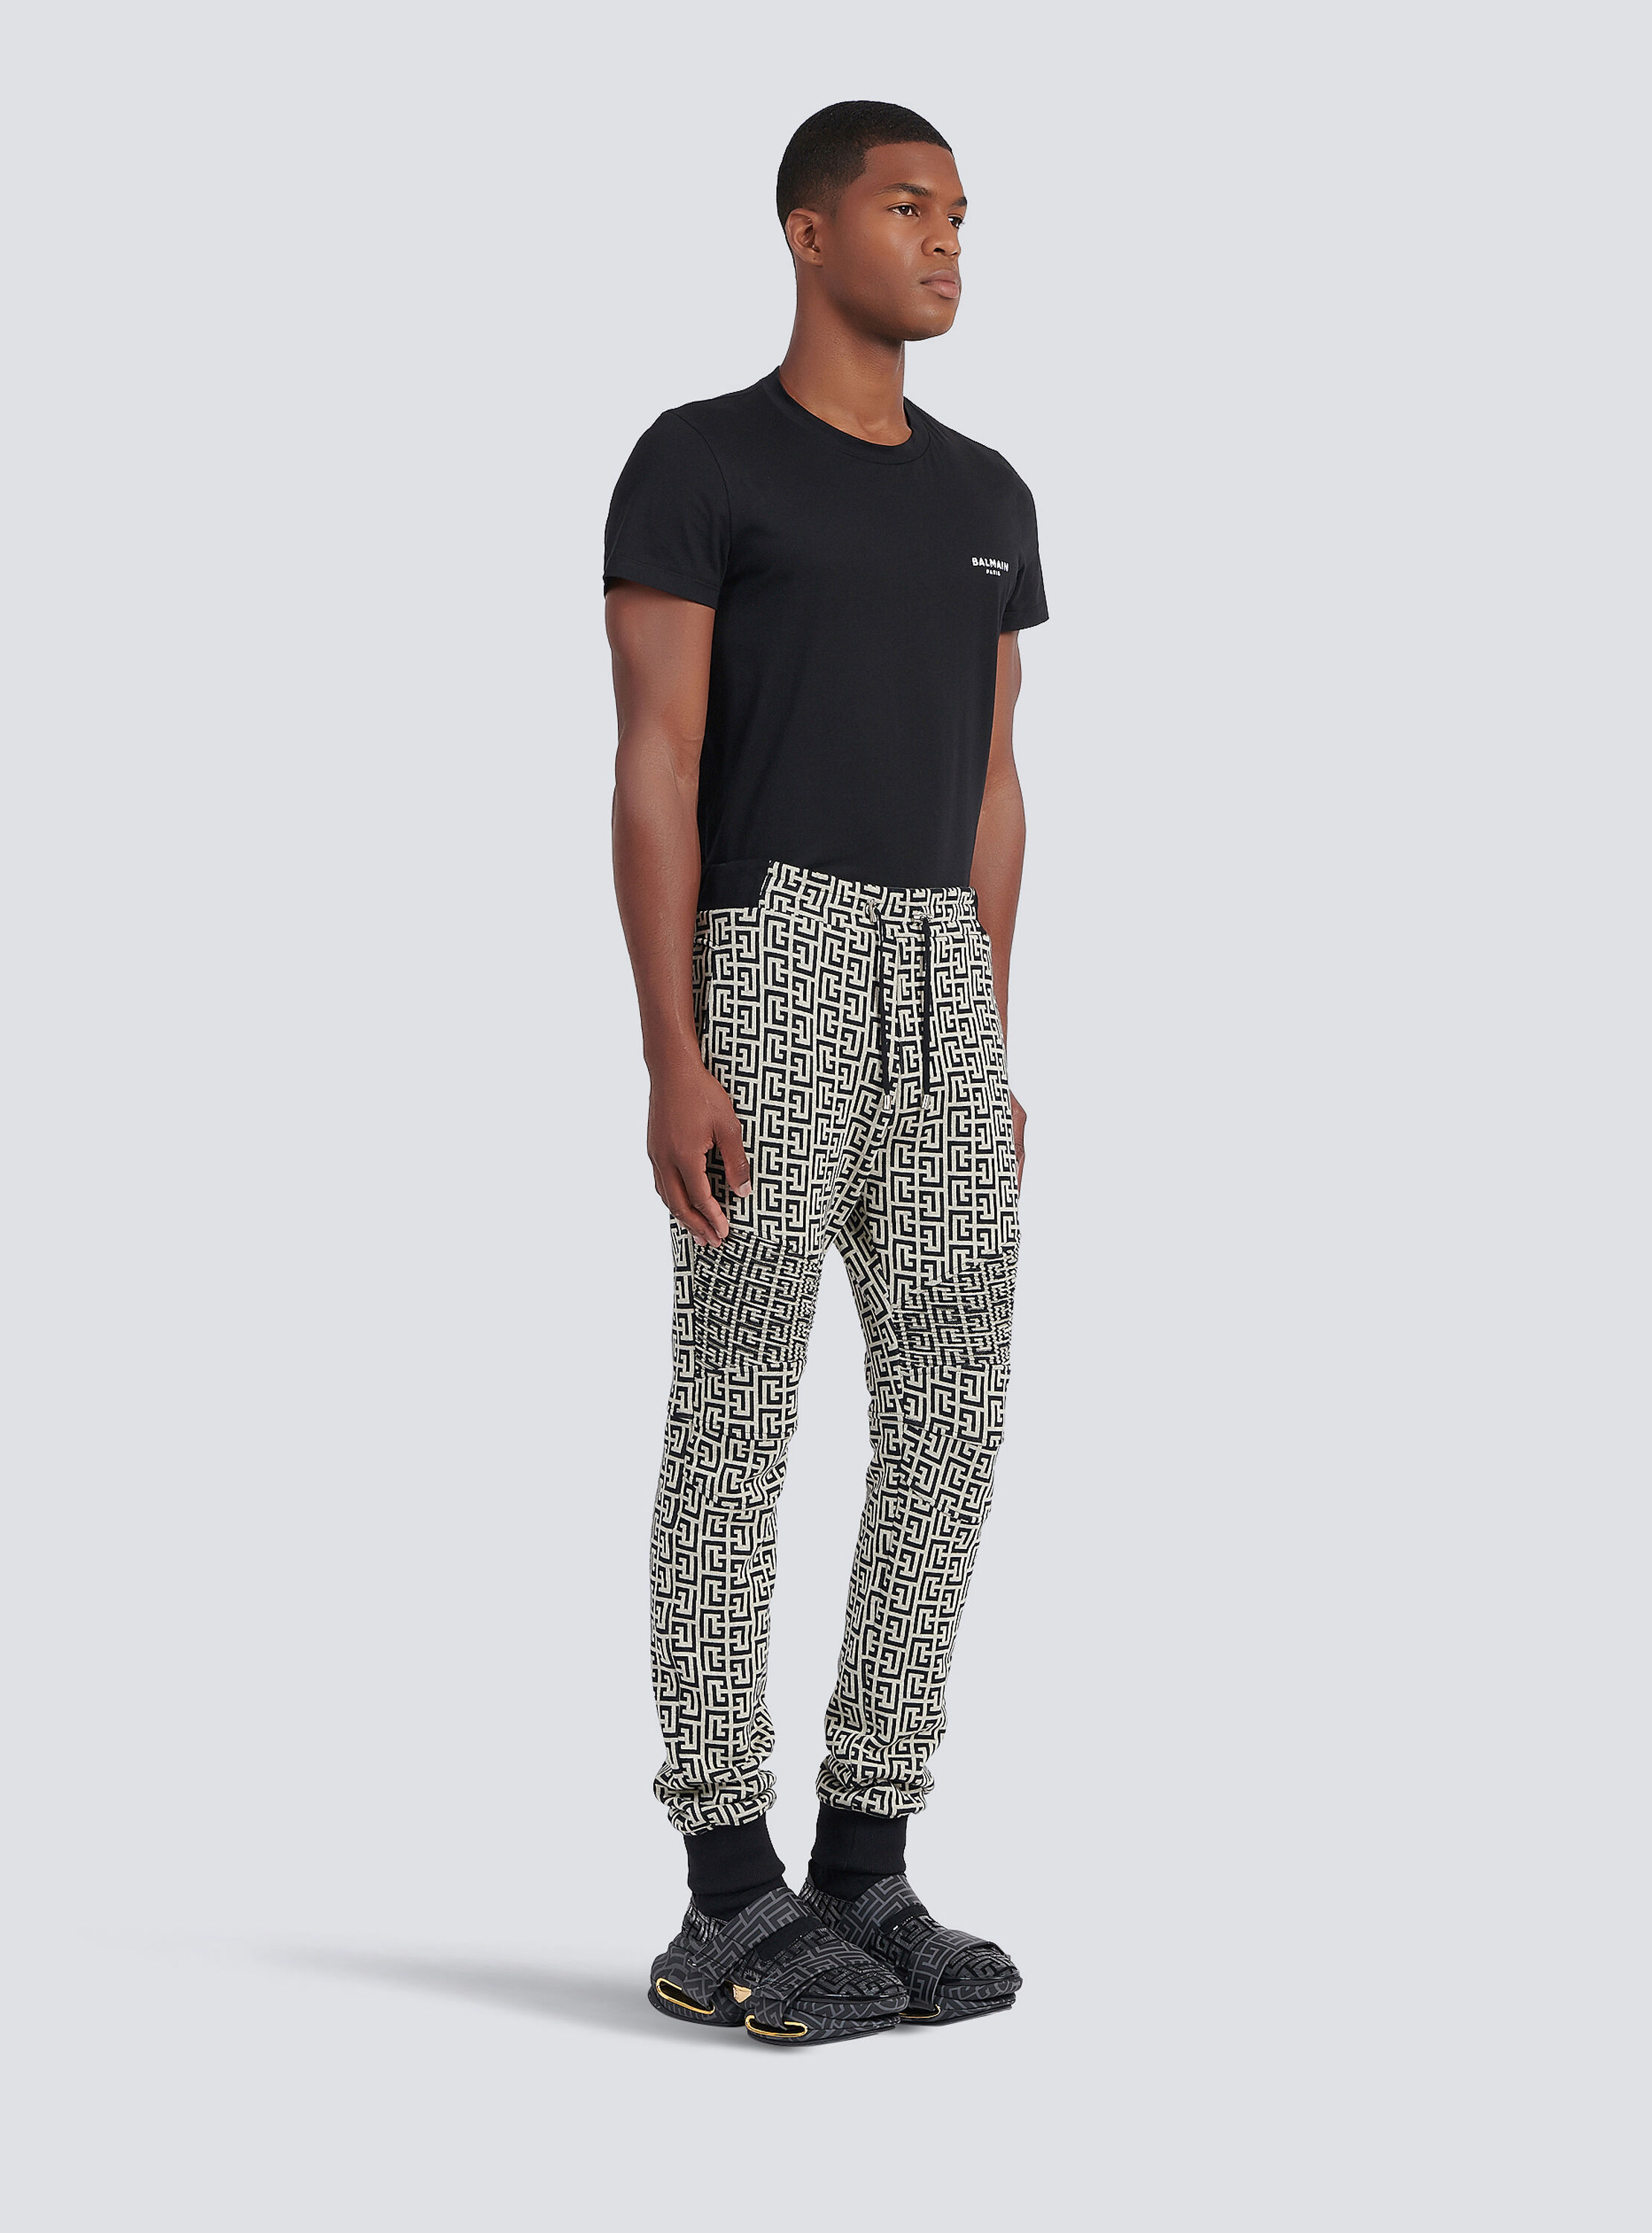 Collection Of Designer Trousers For Men | BALMAIN